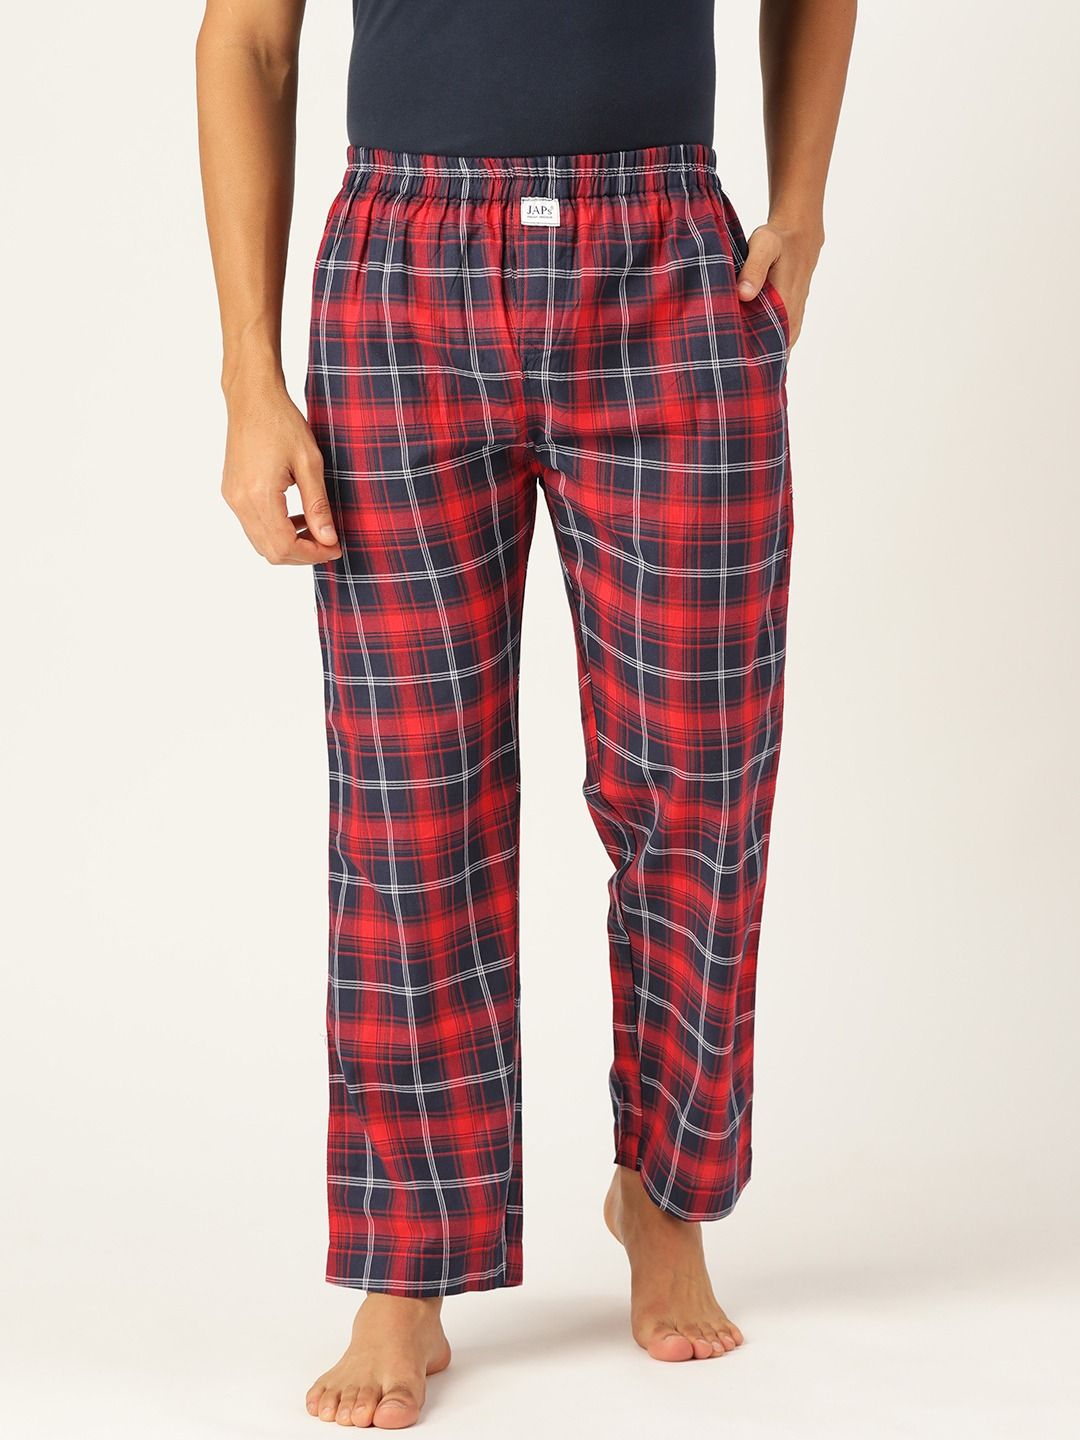 Buy Flannel Pajama Pants Women Online In India -  India